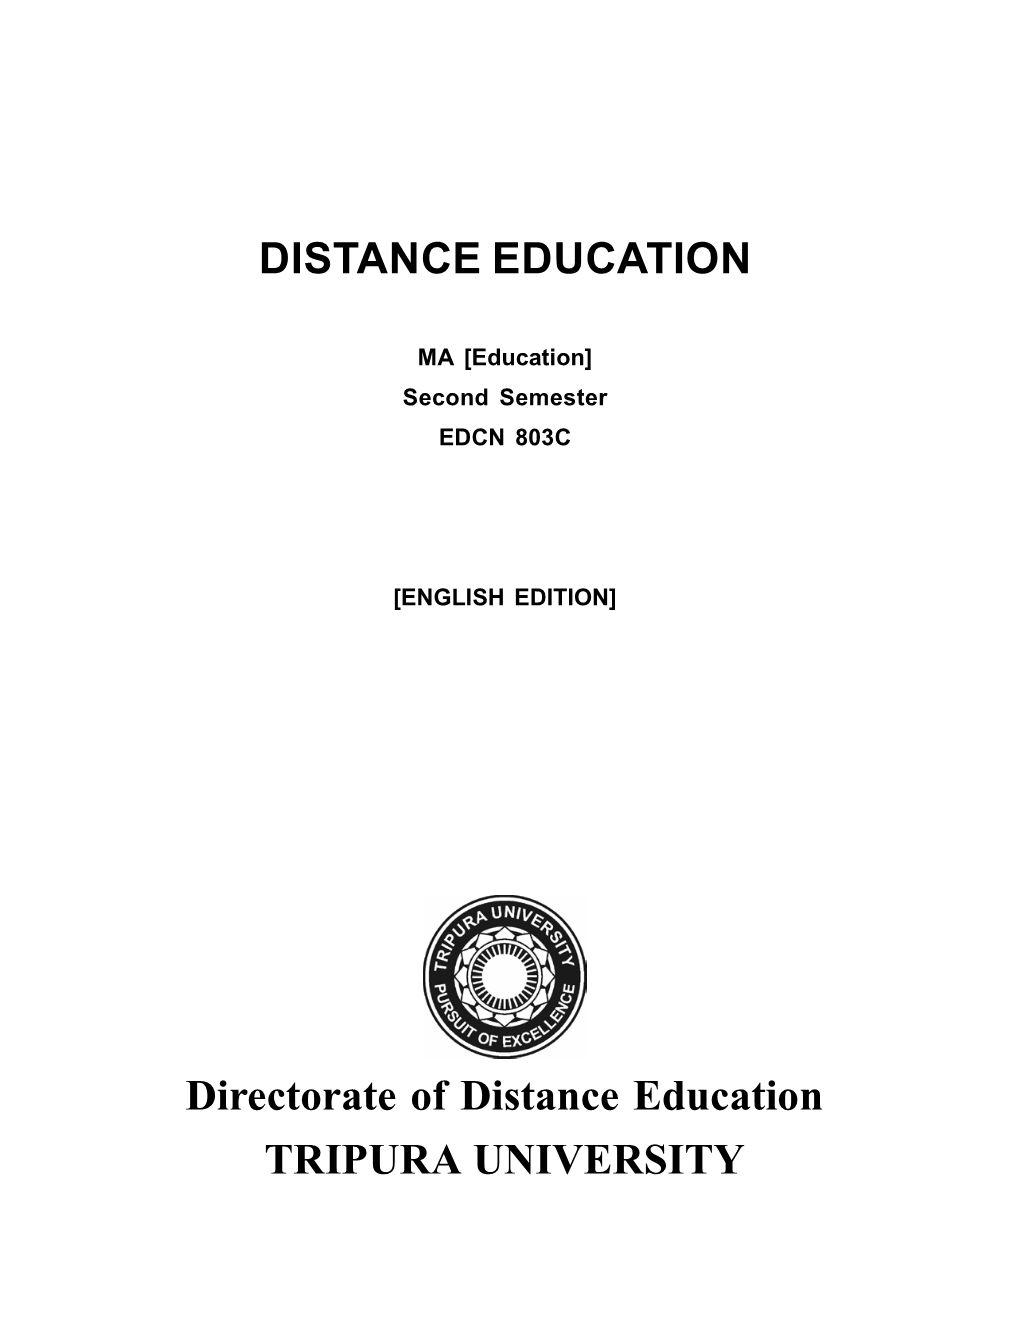 Directorate of Distance Education TRIPURA UNIVERSITY Reviewer Dr Sitesh Saraswat Reader, Bhagwati College of Education, Meerut